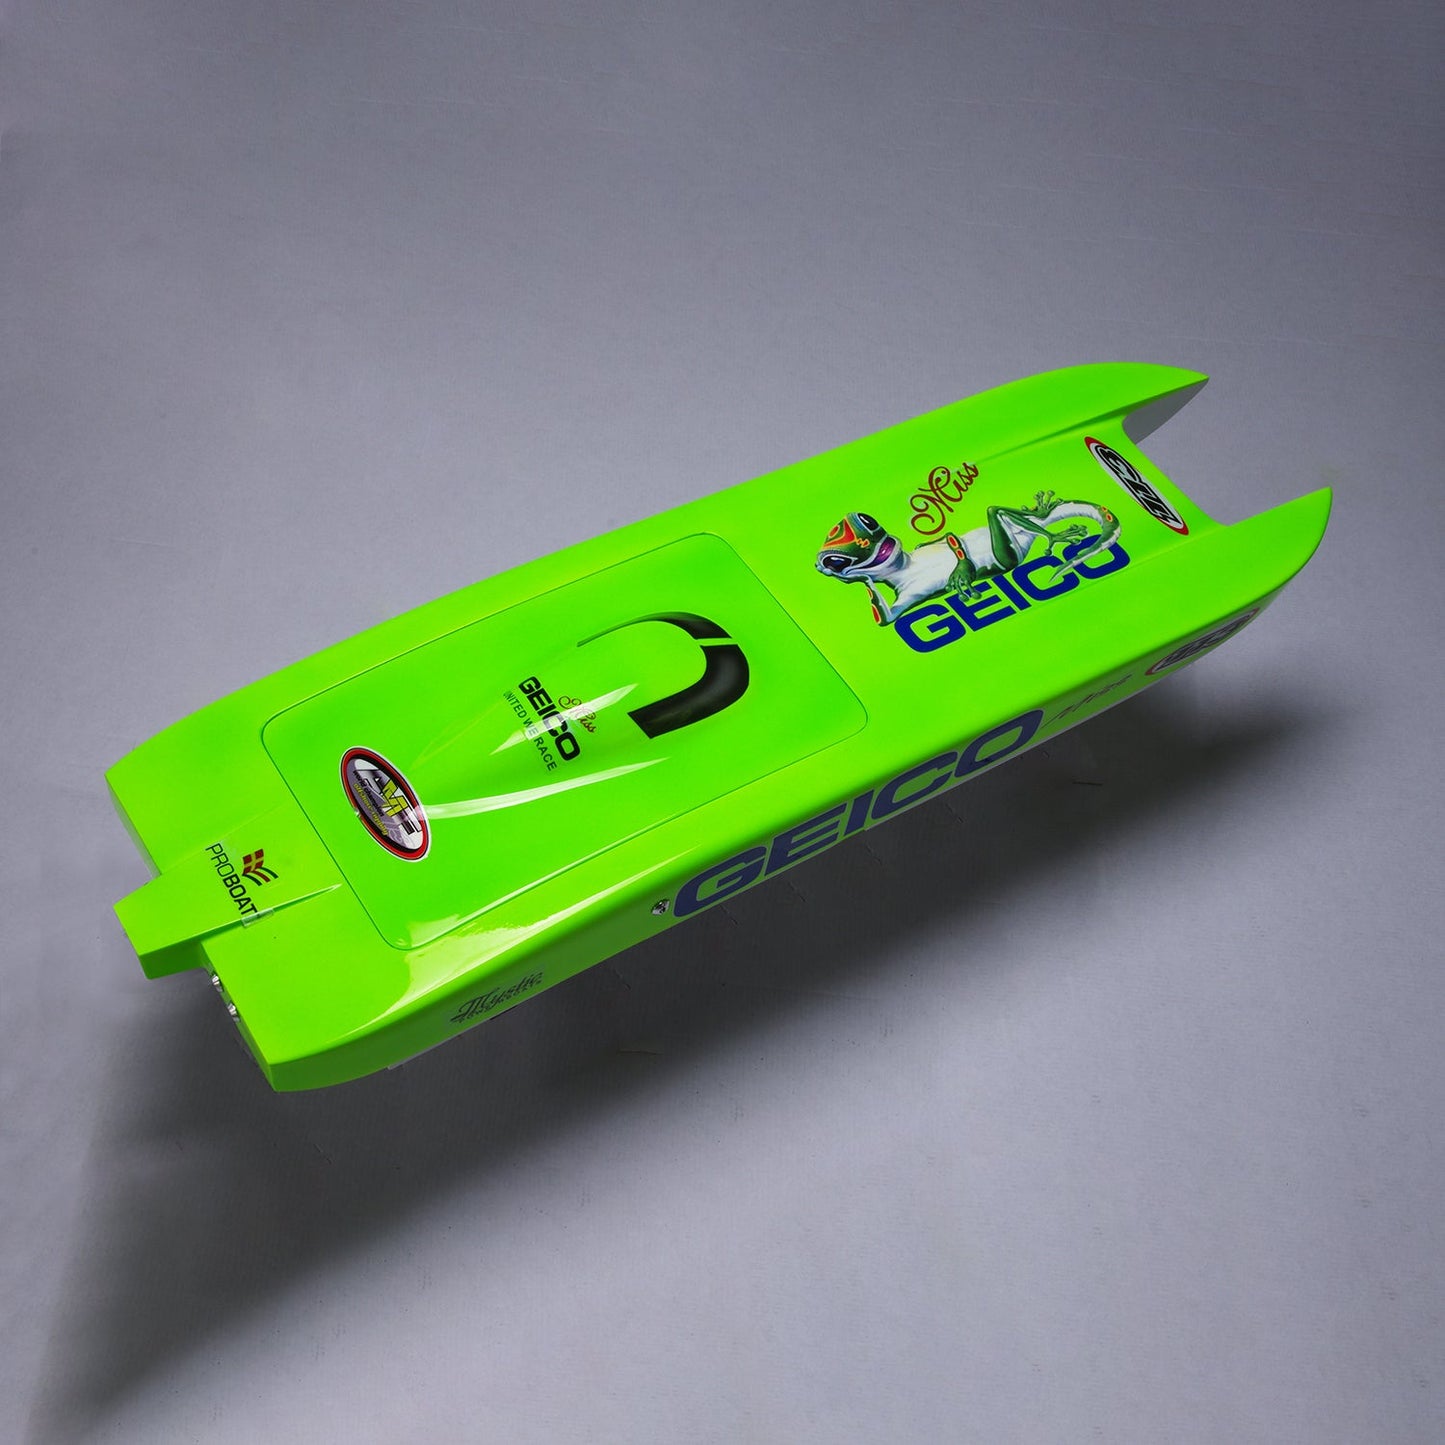 E32 Fiber Glass Painted Green Catamaran Electric Racing KIT RC Boat Hull for Advanced Player DIY Model Adult Gift 785*235*115mm